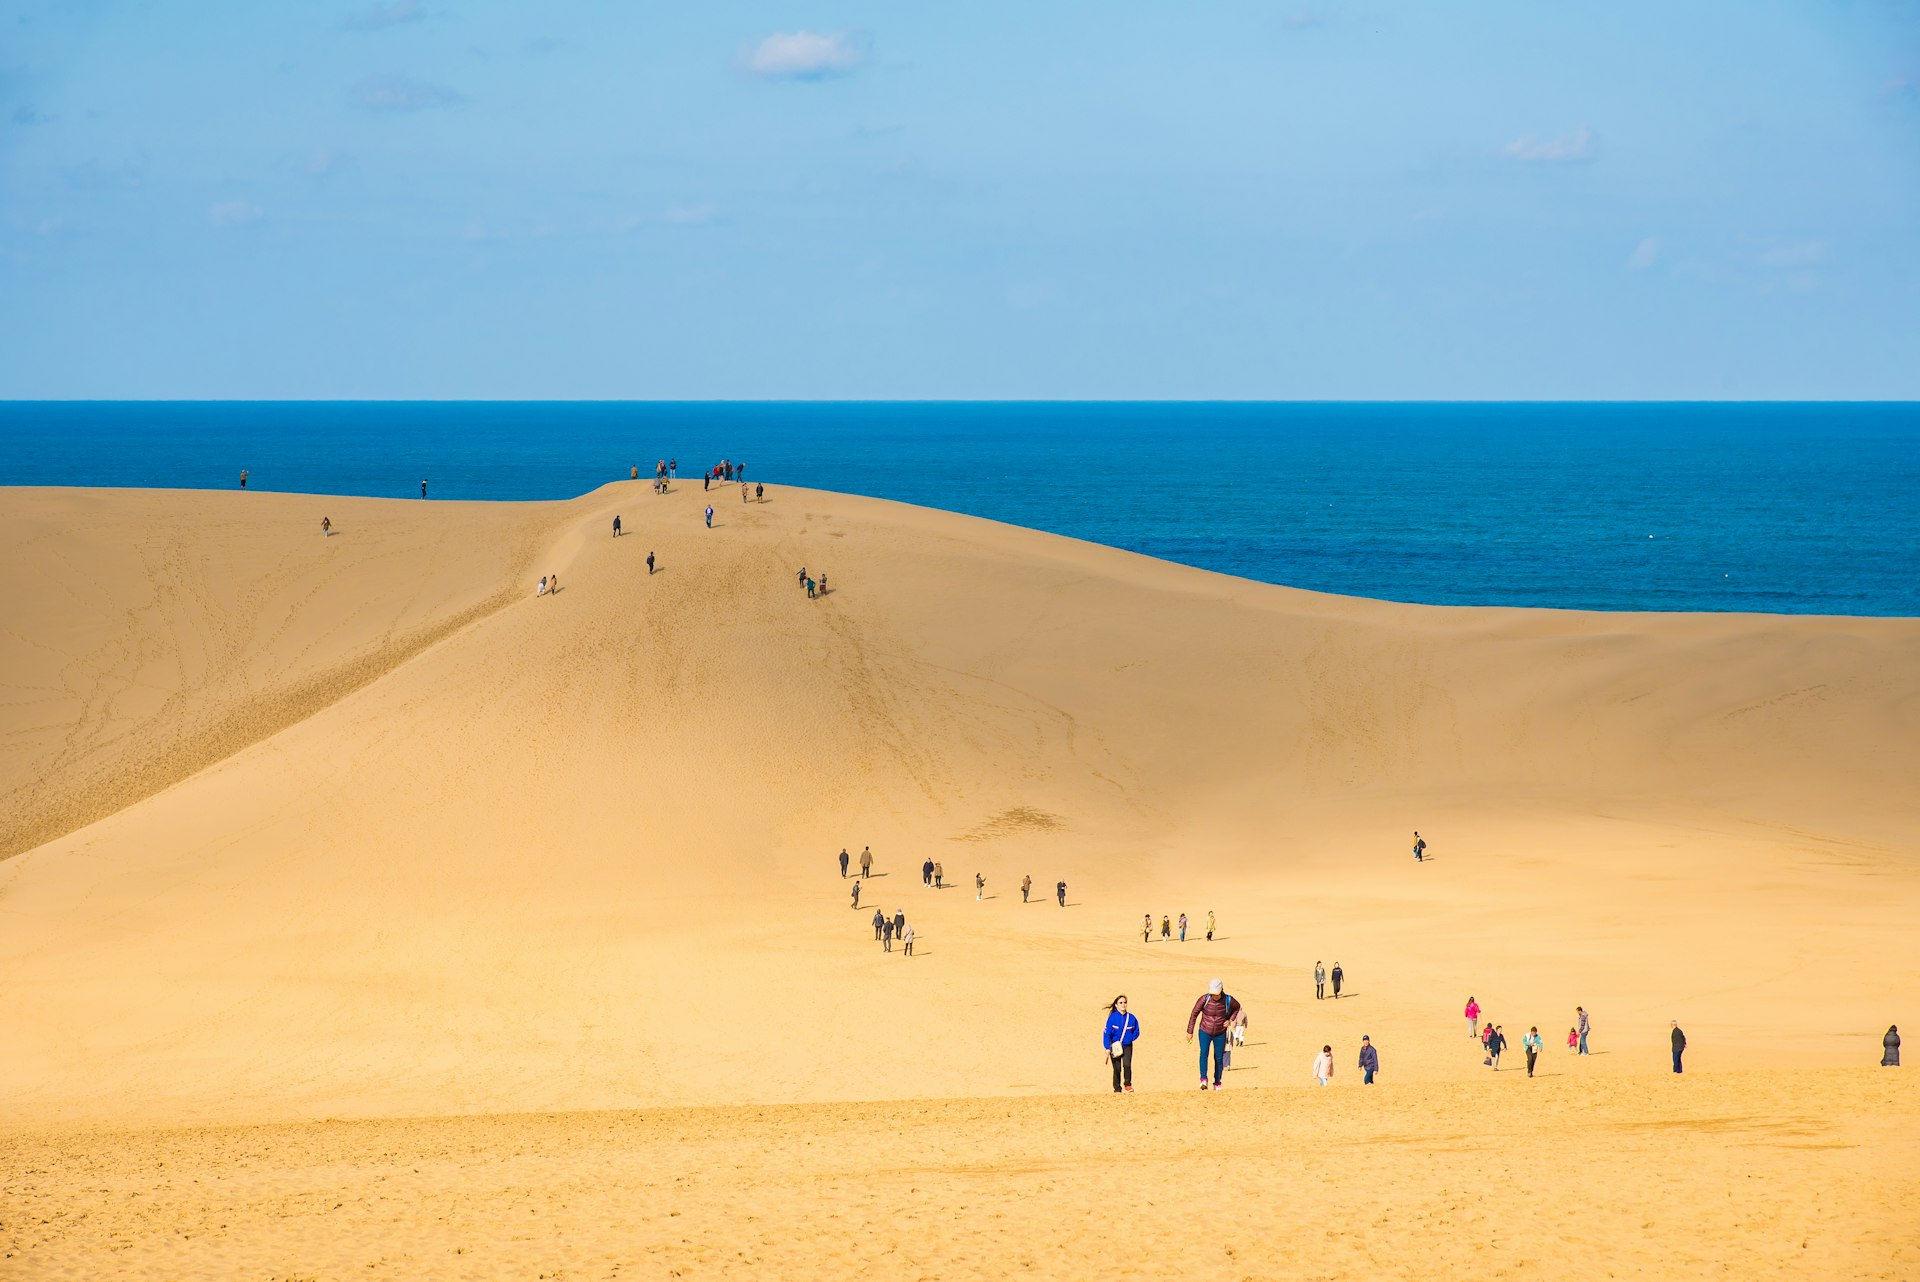 People on the sand dunes of Tottori, western Japan